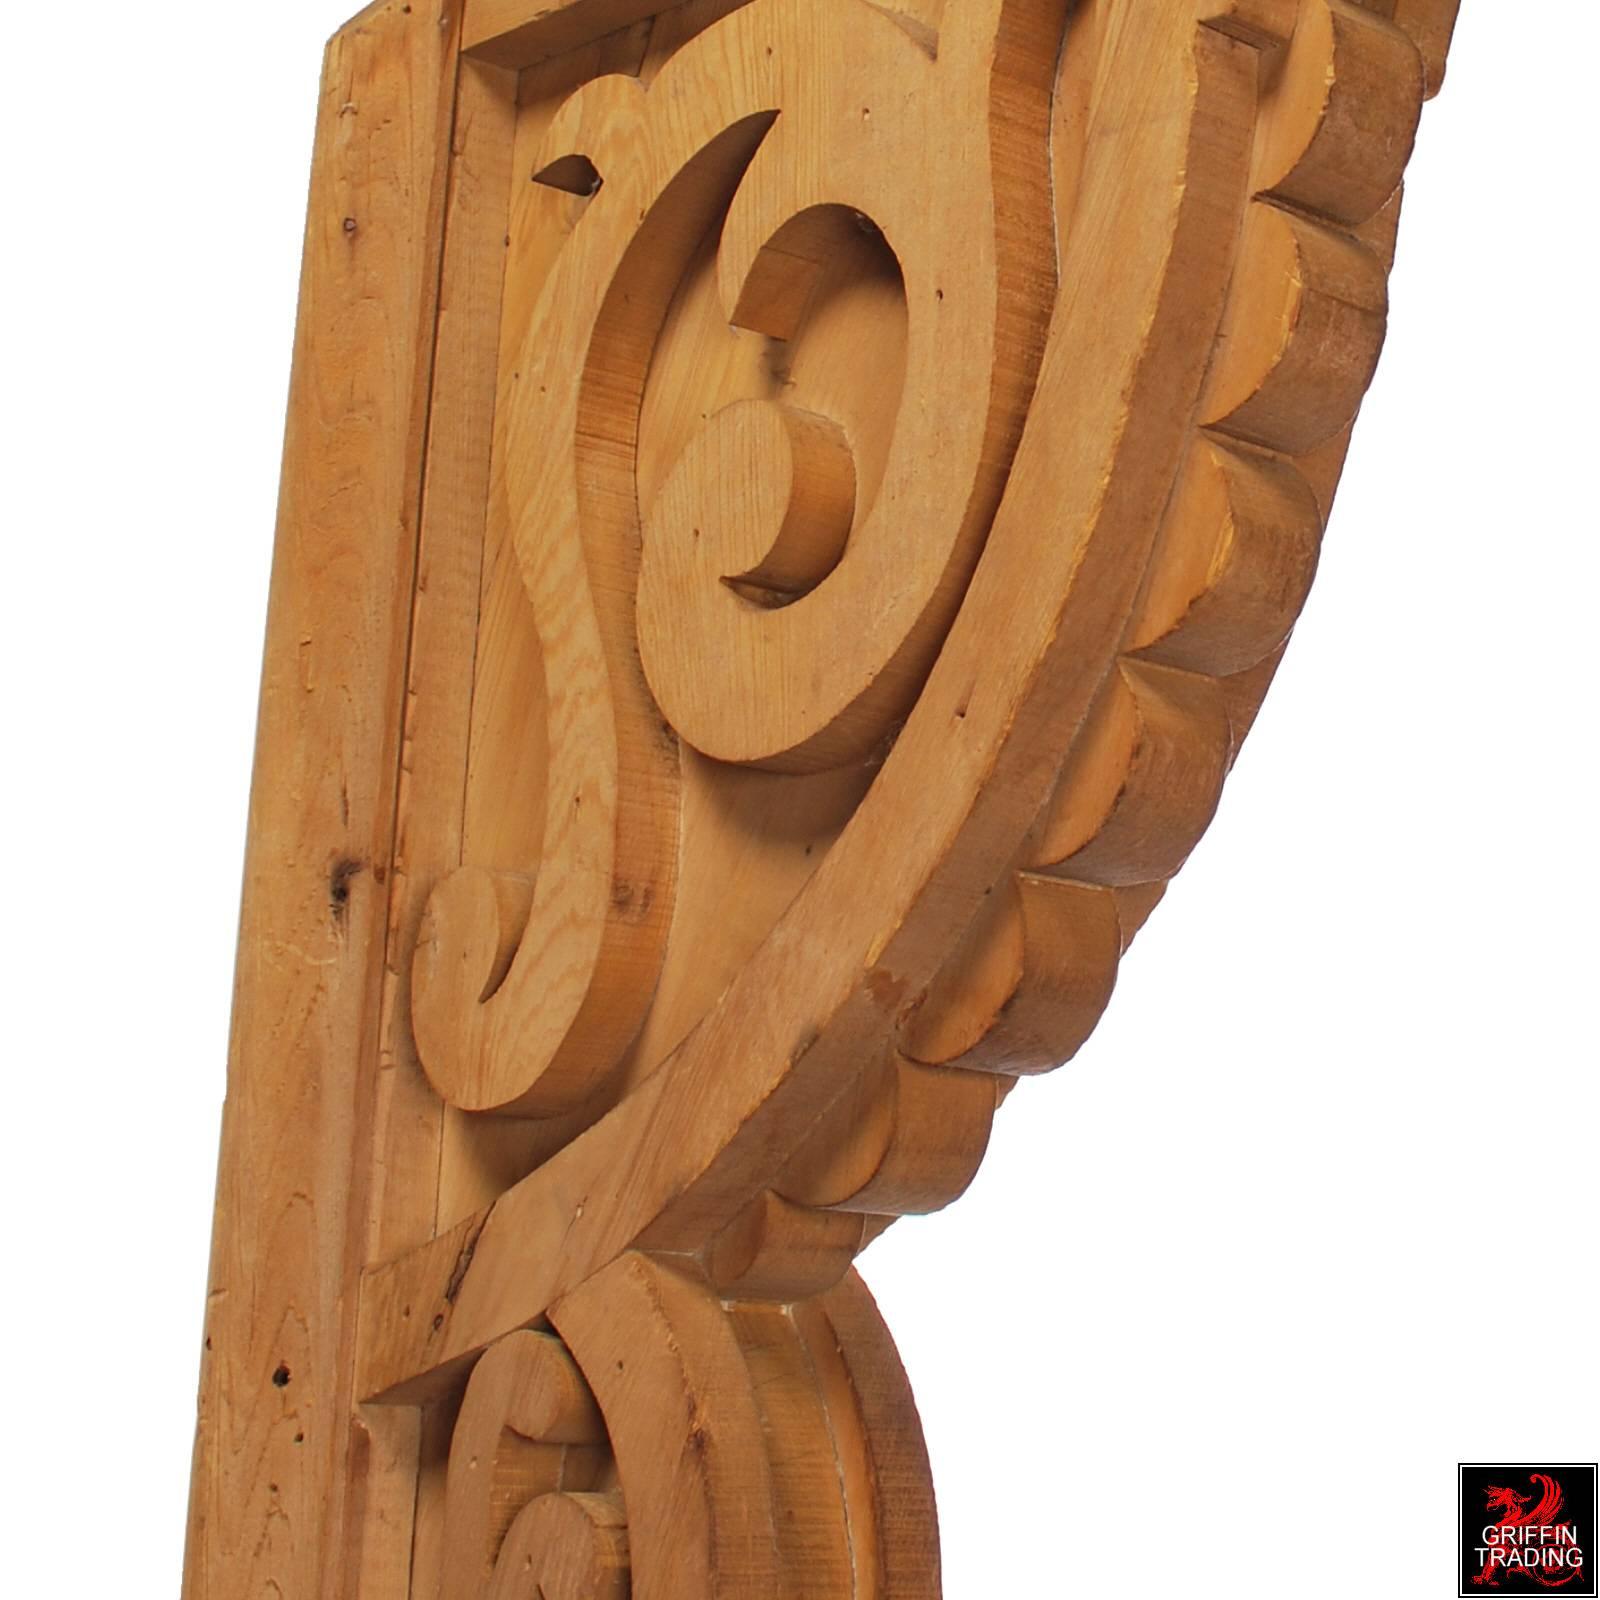 19th Century Large Antique Wood Corbel, Bracket / Architectural Element For Sale